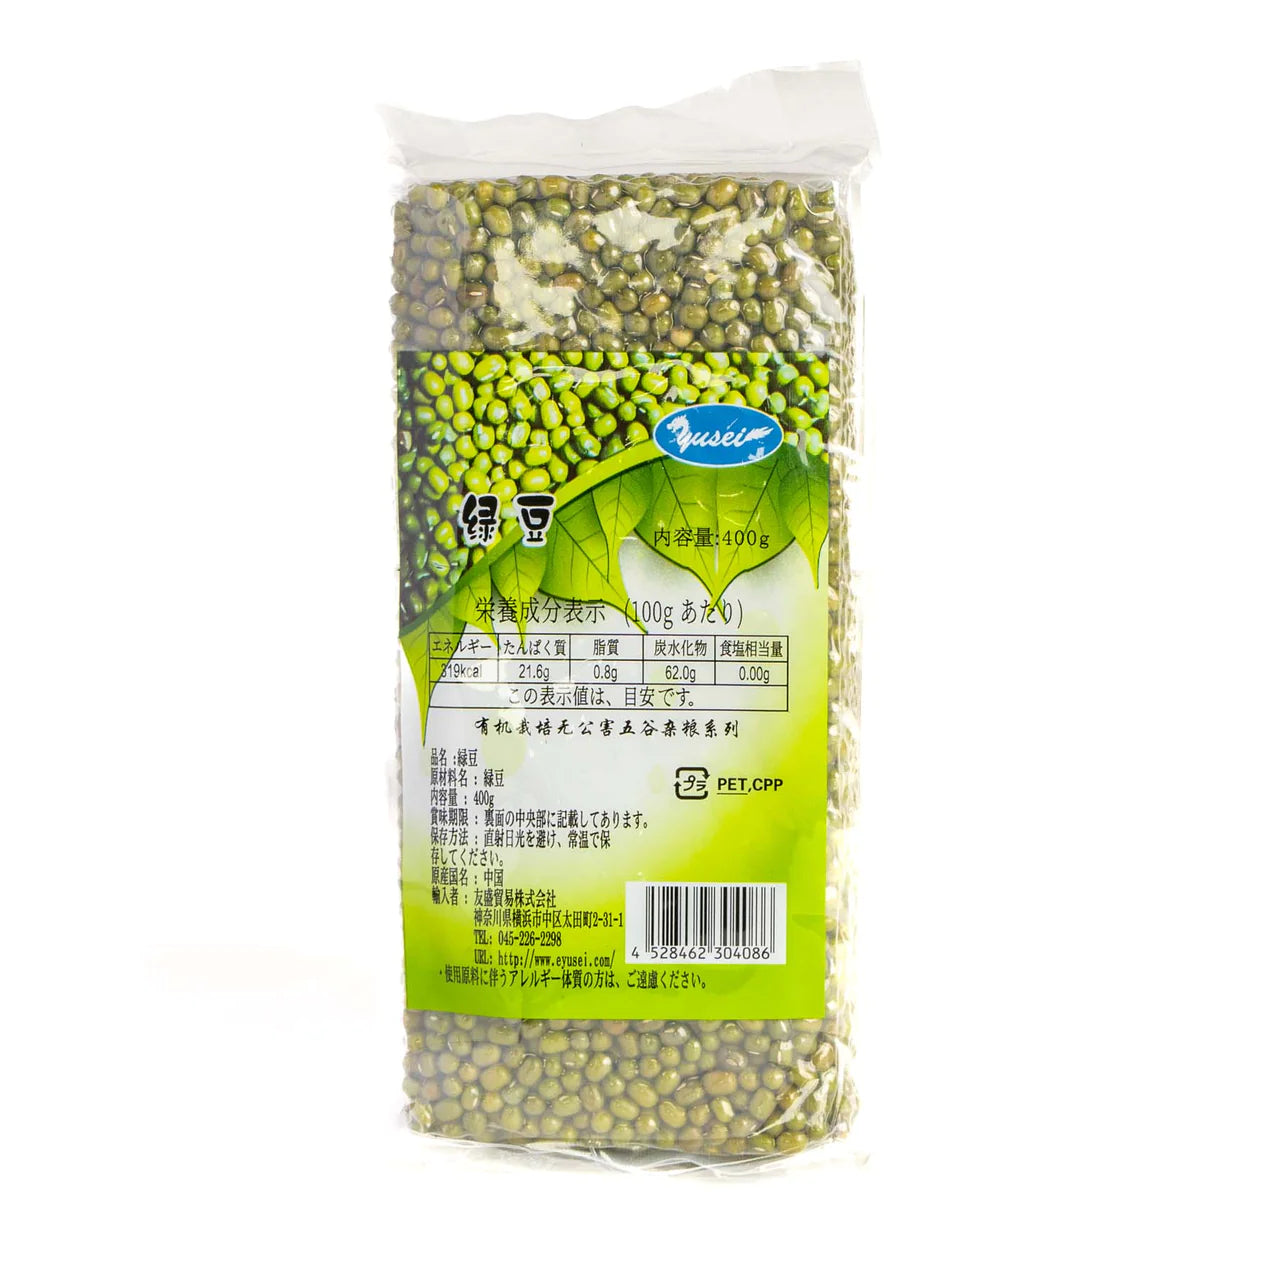 Tomomori Selected Mung Beans 400g